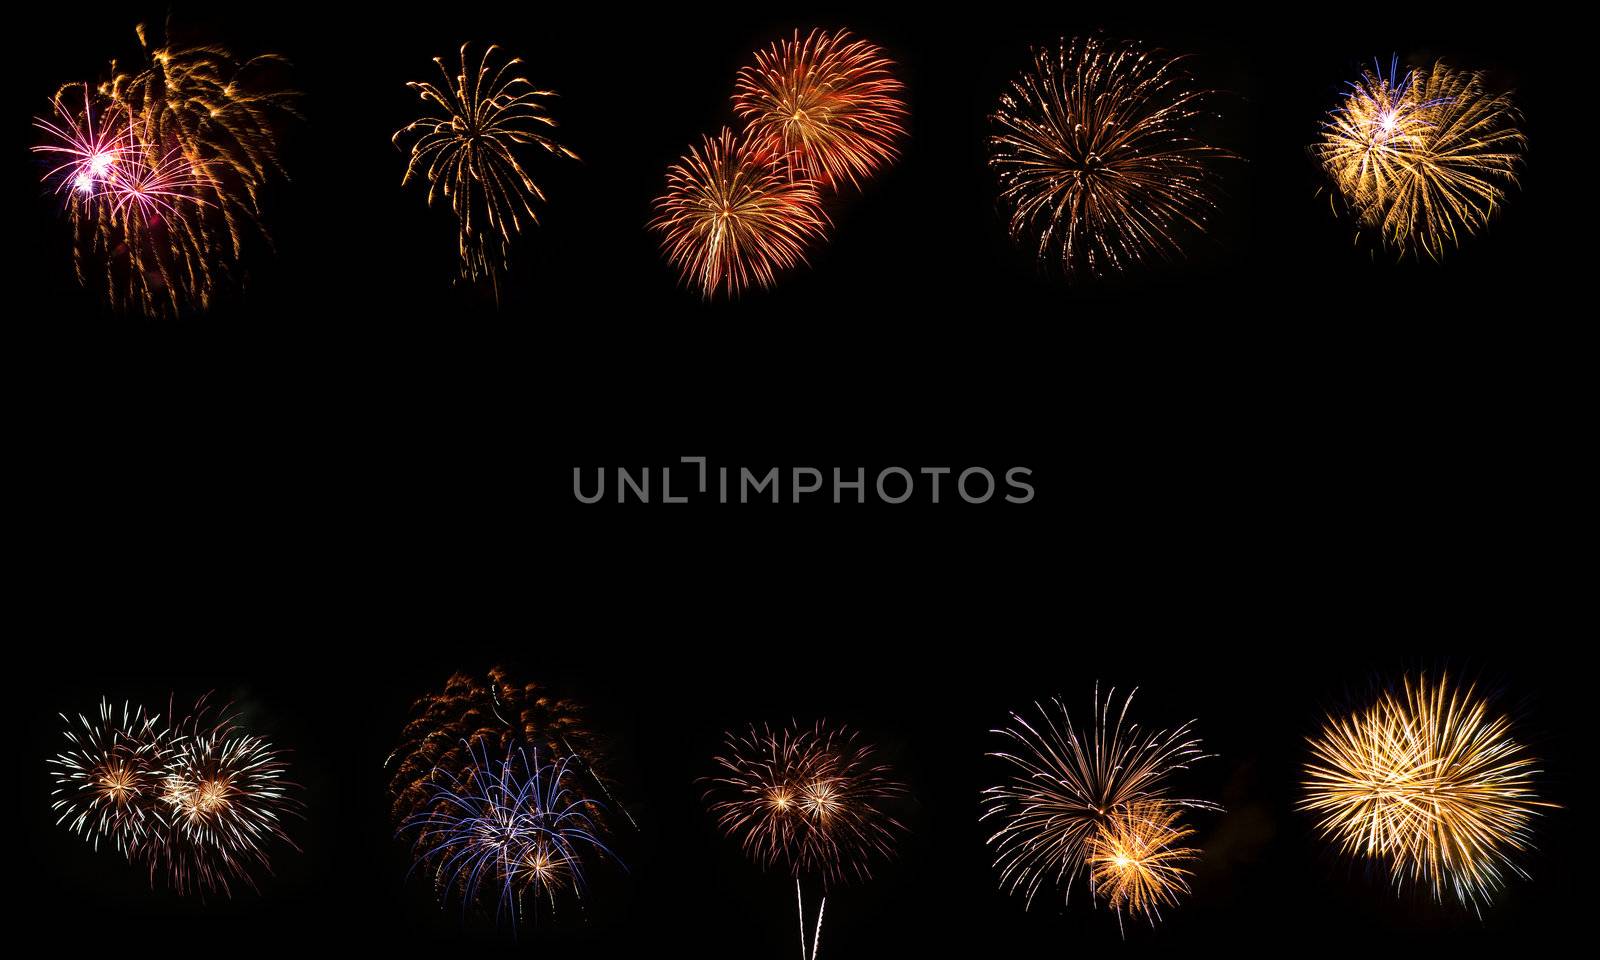 Long Exposure of Fireworks Frame Against a Black Sky